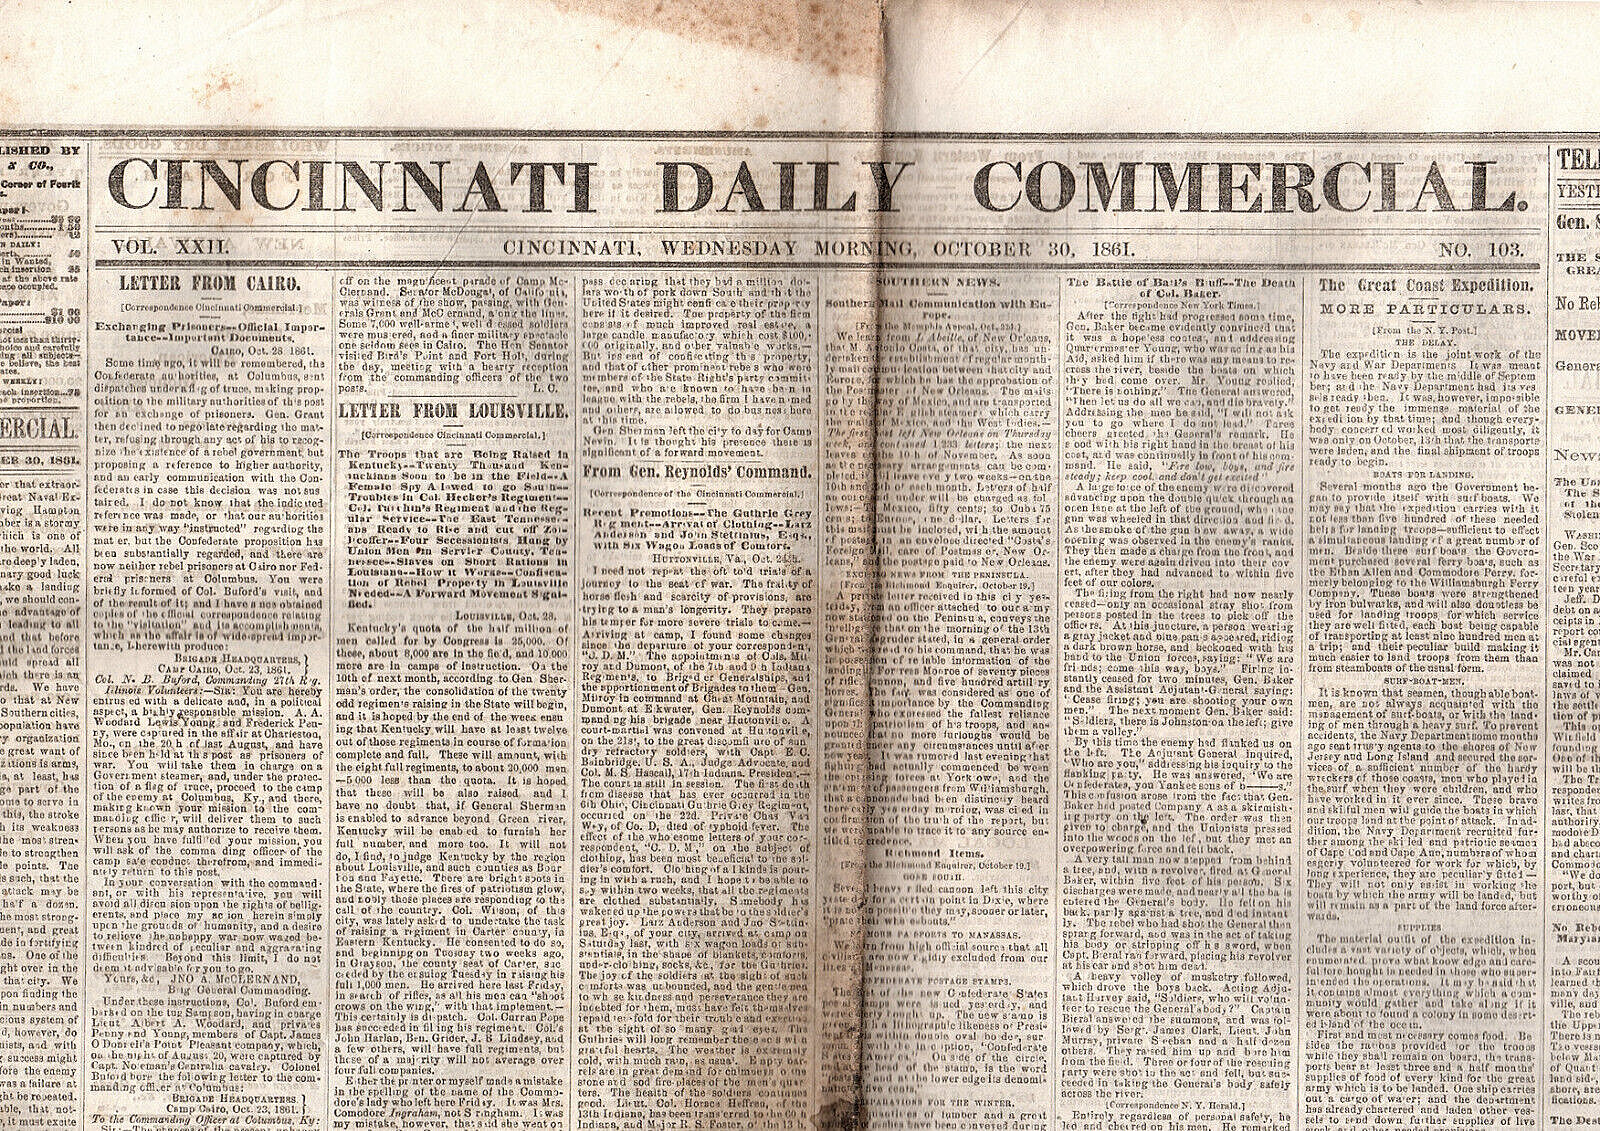 Cincinnati Daily Commercial, October 30, 1861, Volume XXII, No. 103, Ohio